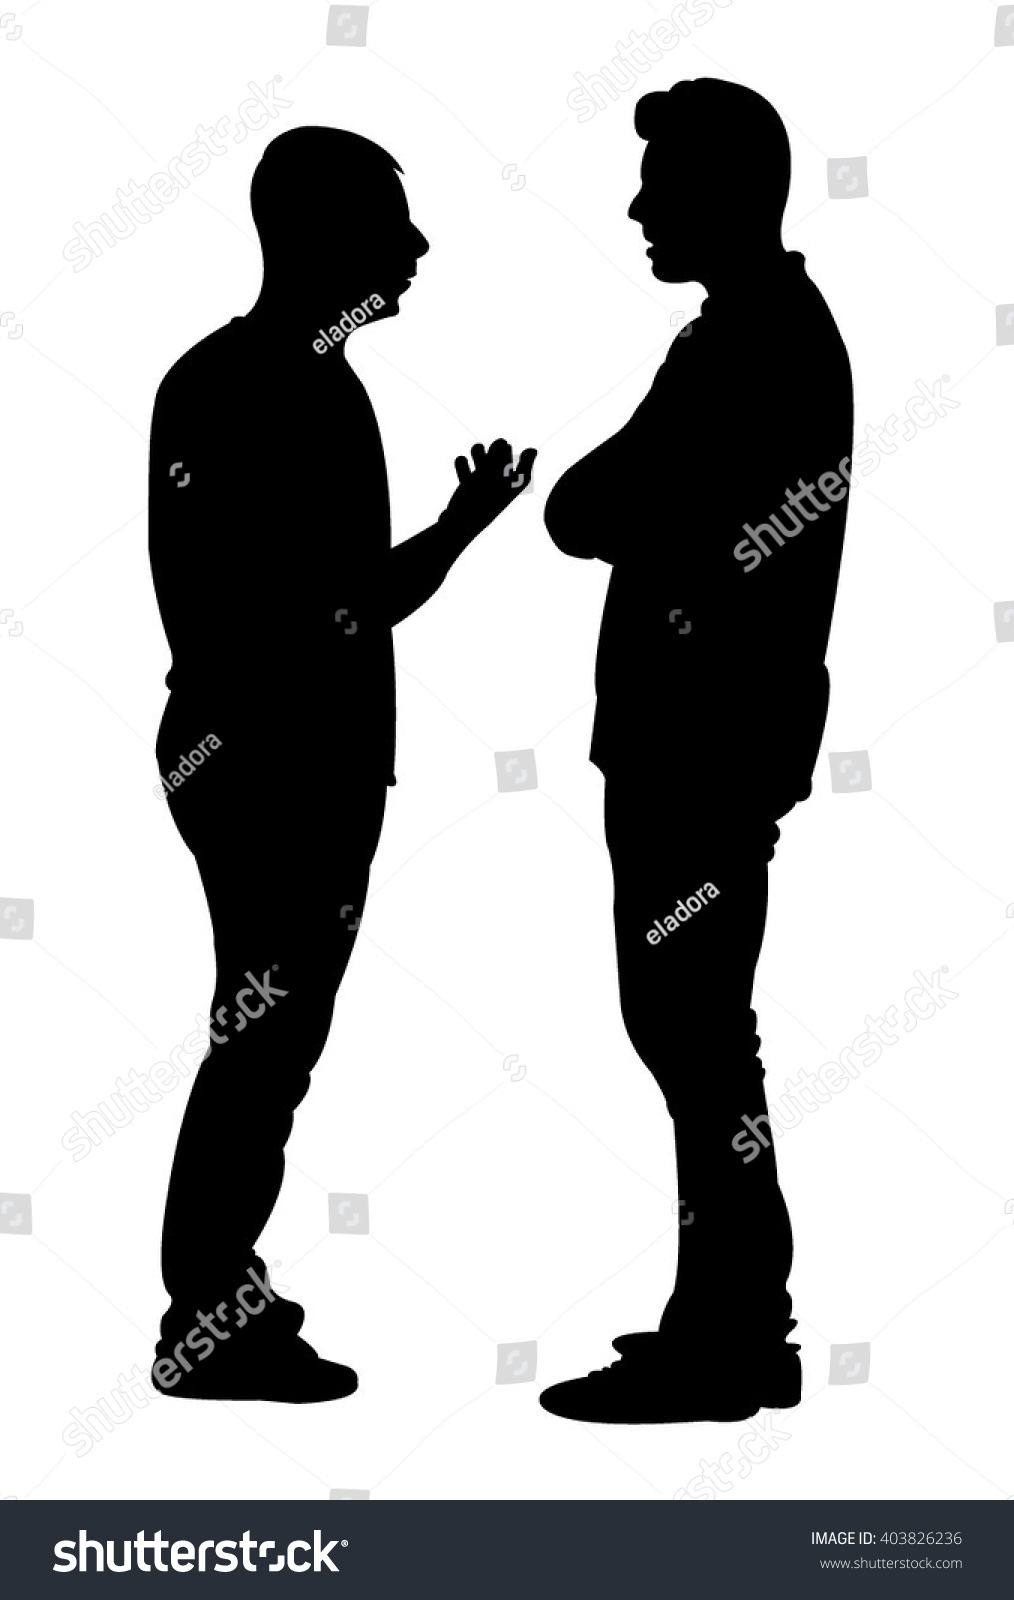 1,701 Men arguing silhouette Images, Stock Photos & Vectors | Shutterstock